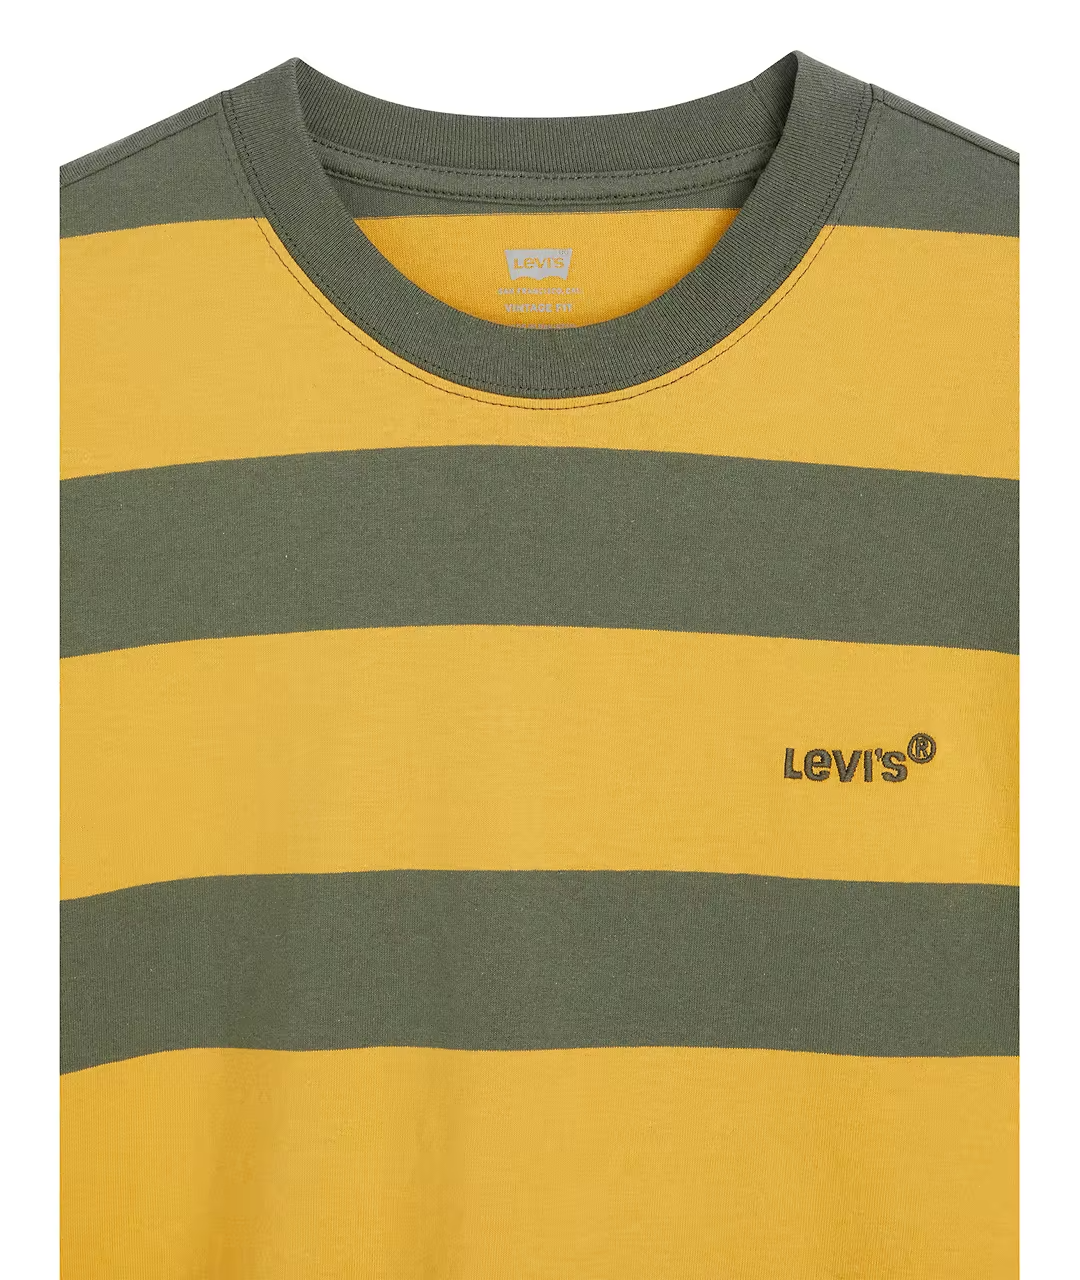 Levi's - Red Tab™ Vintage T-shirt